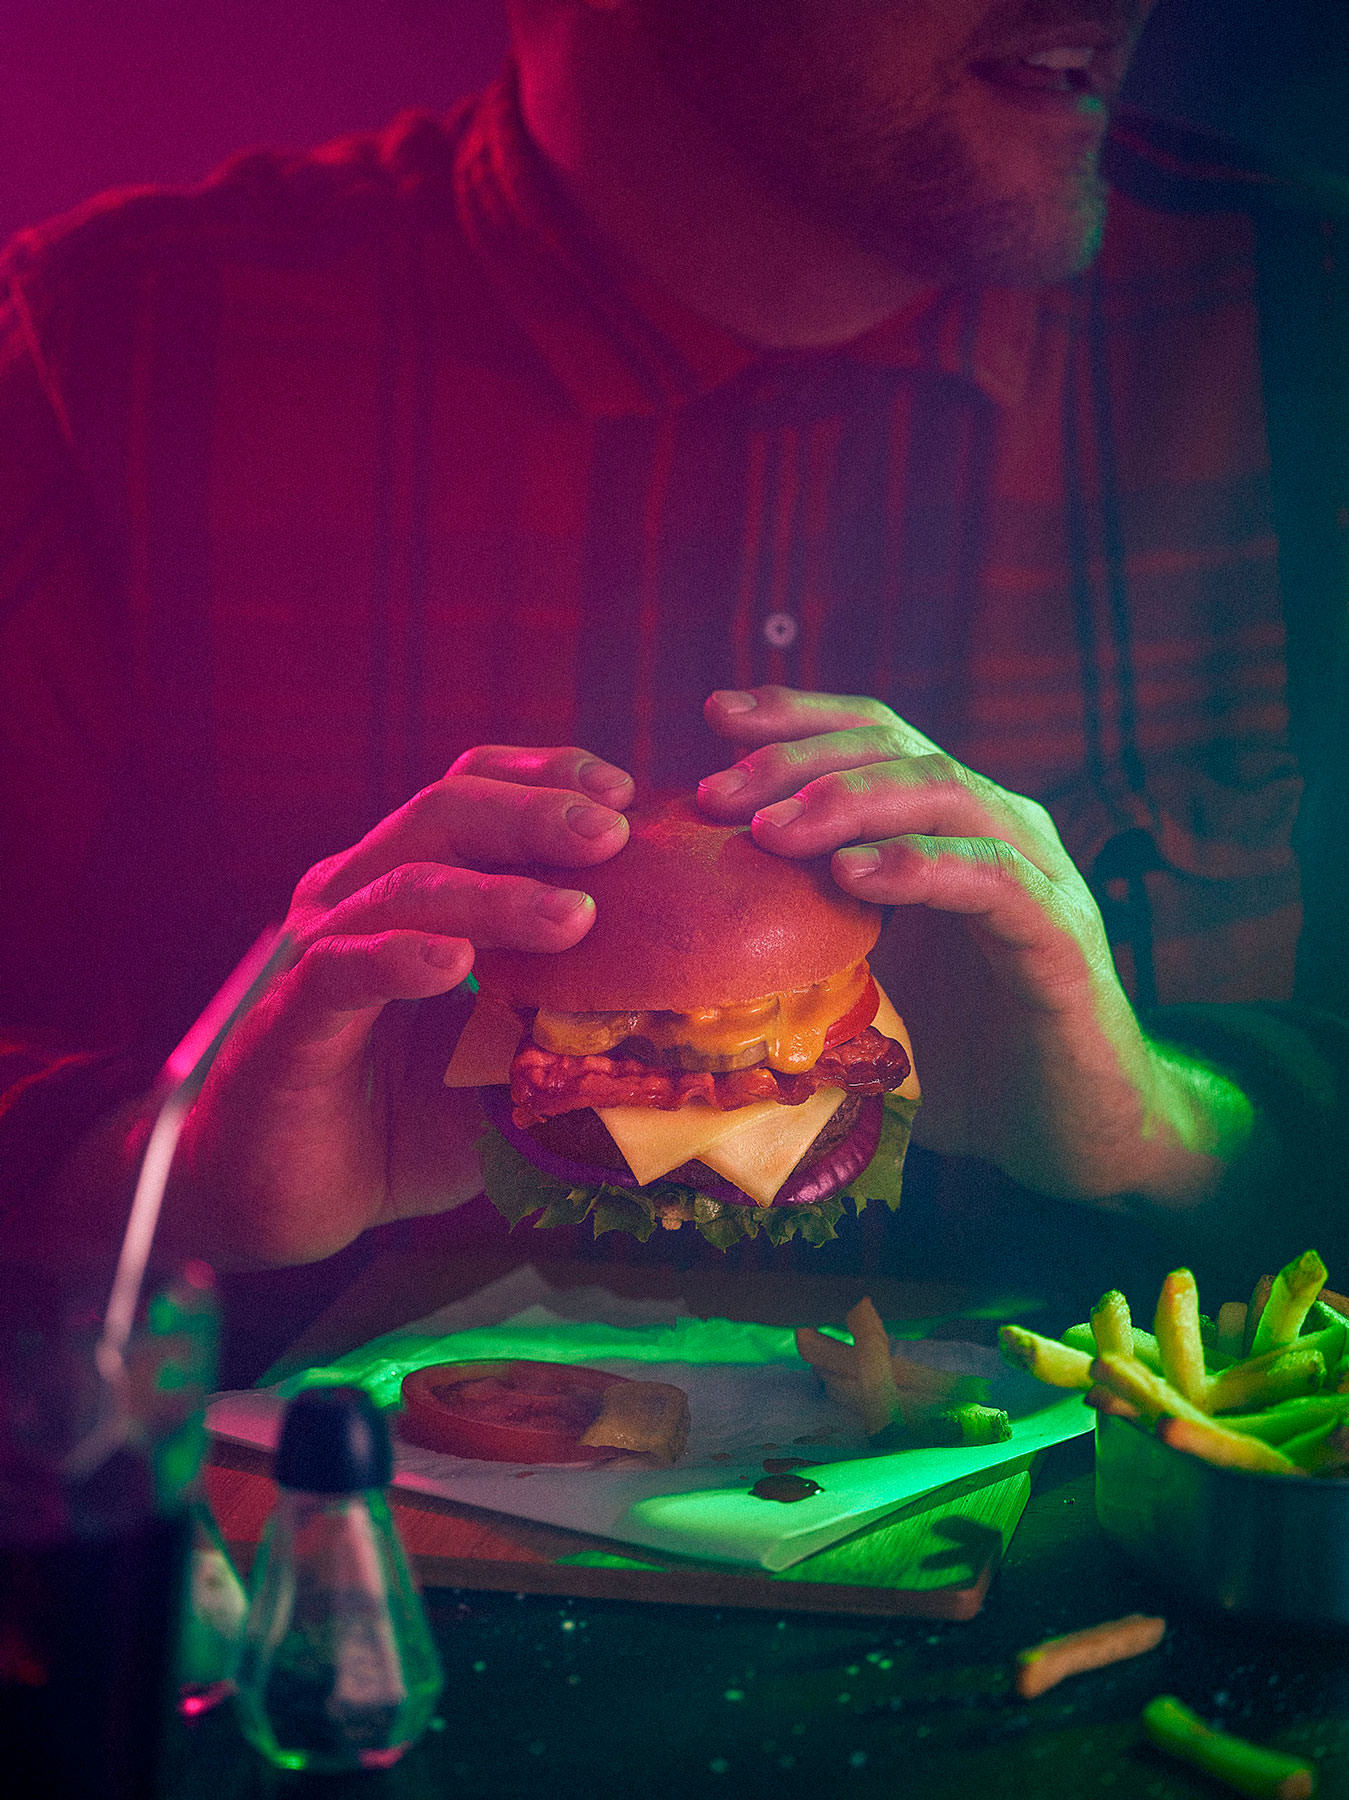 burger being eaten in late night bar - London Food & Drinks Photographer